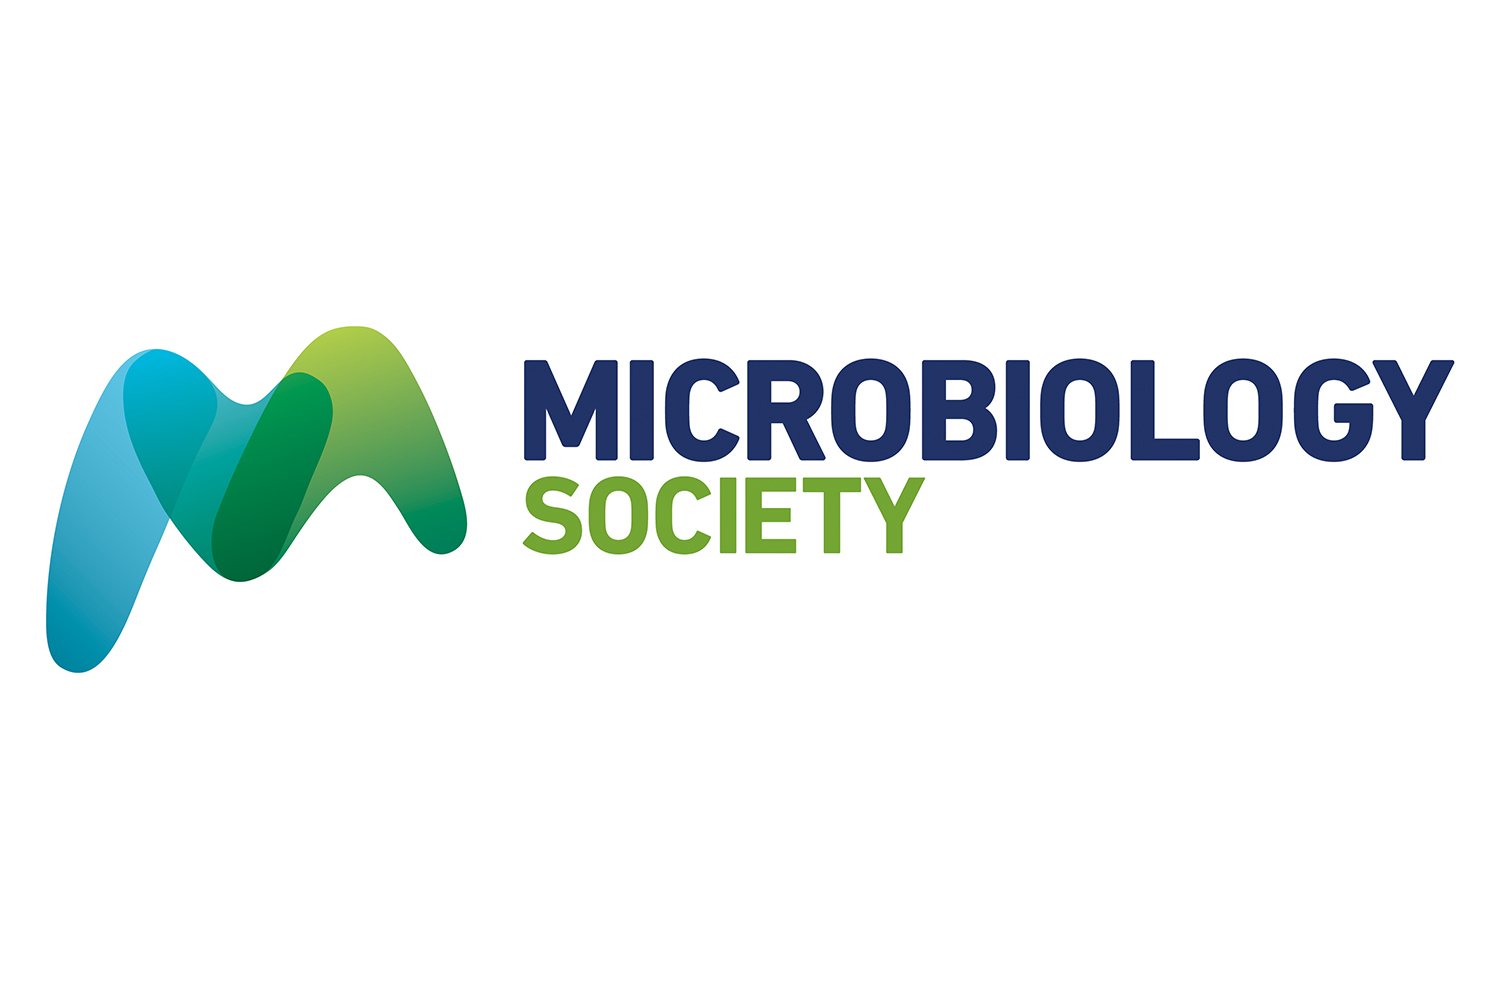 Dr Miguel Toribio-Mateas Microbiology SocietyMember copy.jpg (Copy) (Copy)